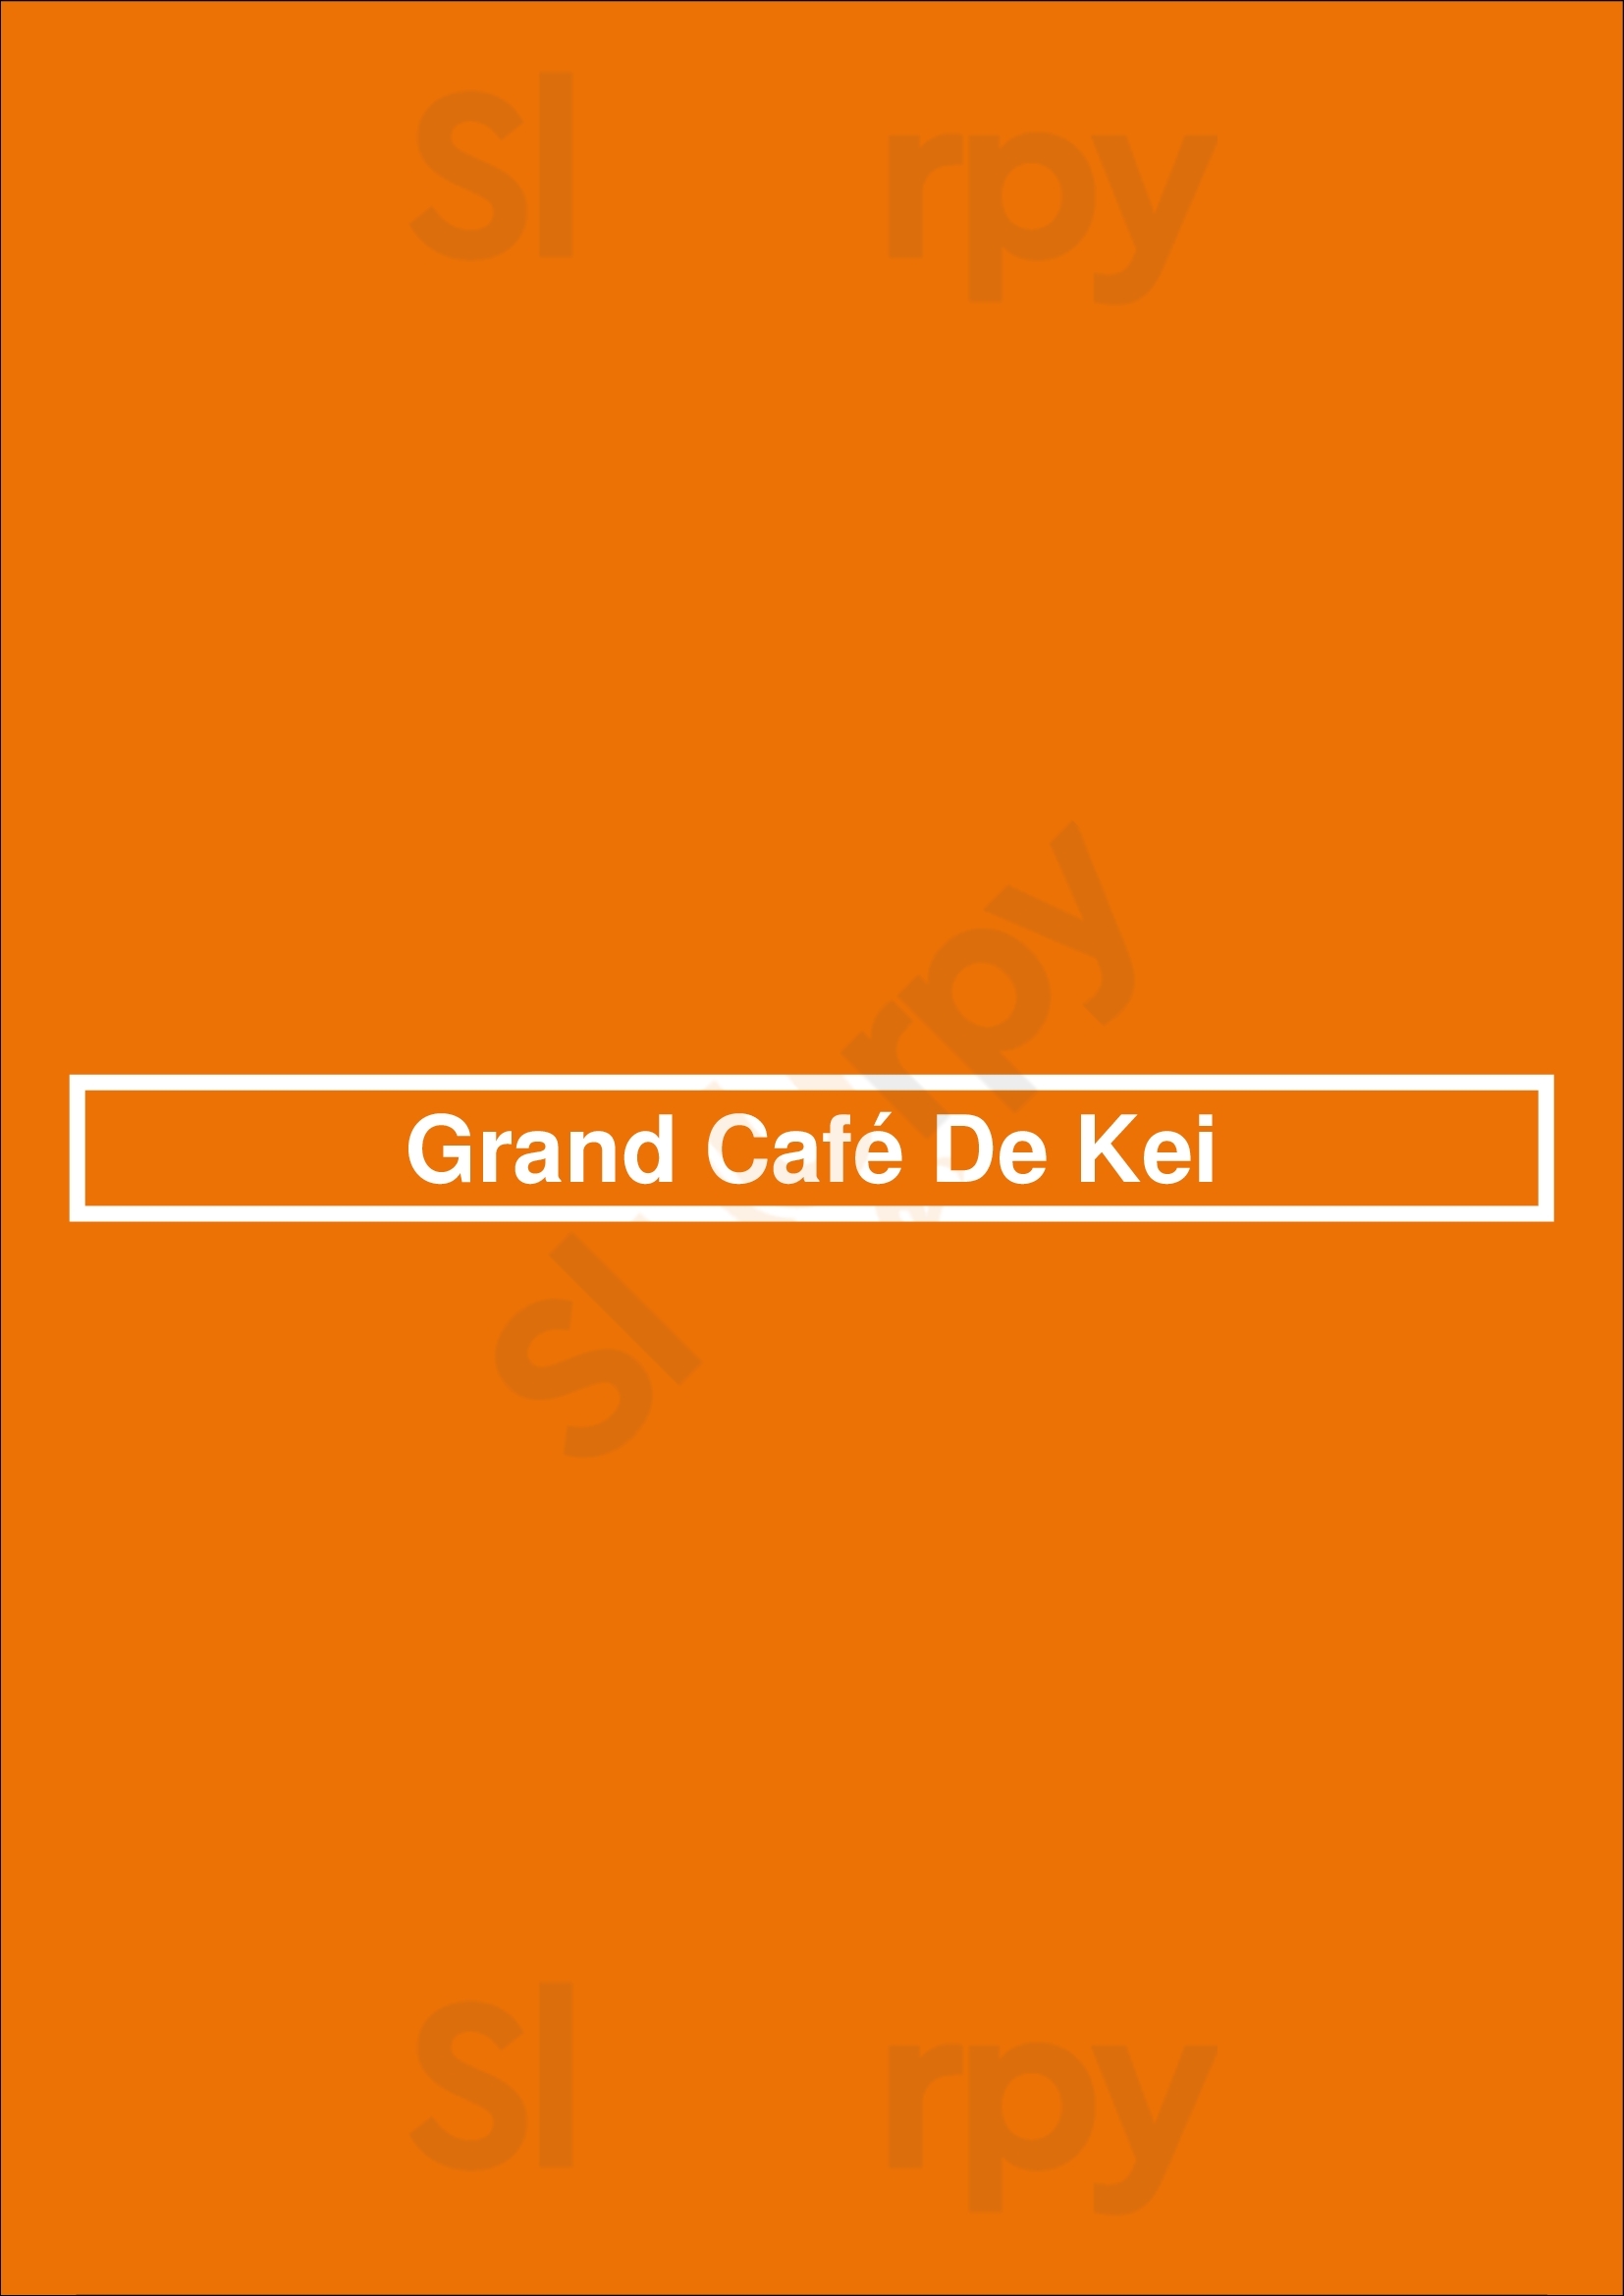 Grand Café De Kei Veenendaal Menu - 1